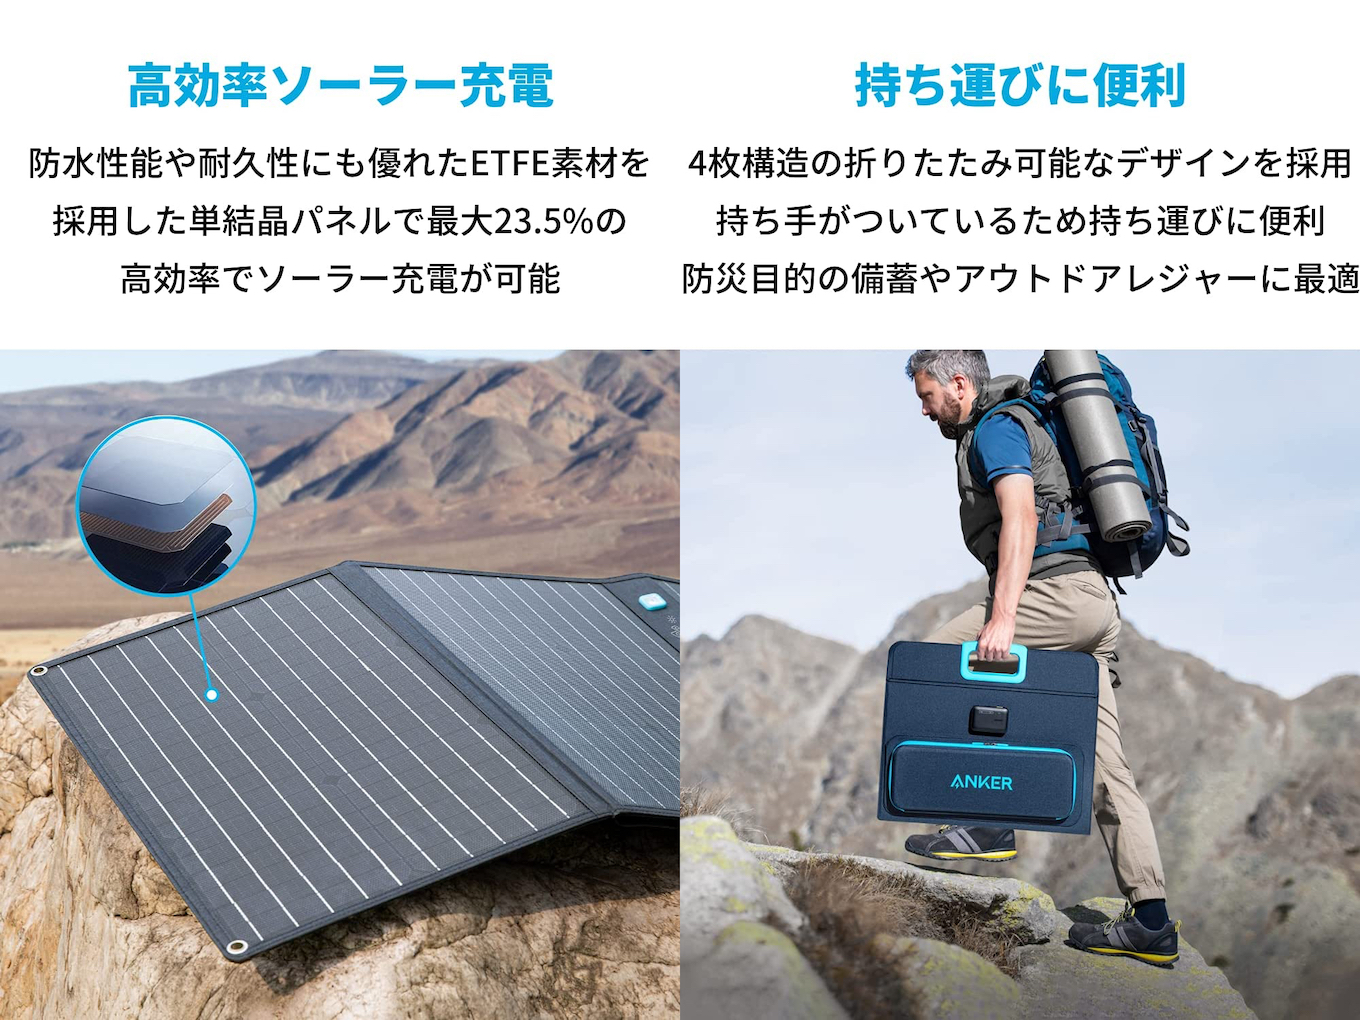 Anker Japan、ポータブル電源PowerHouse IIシリーズの充電にも対応した 